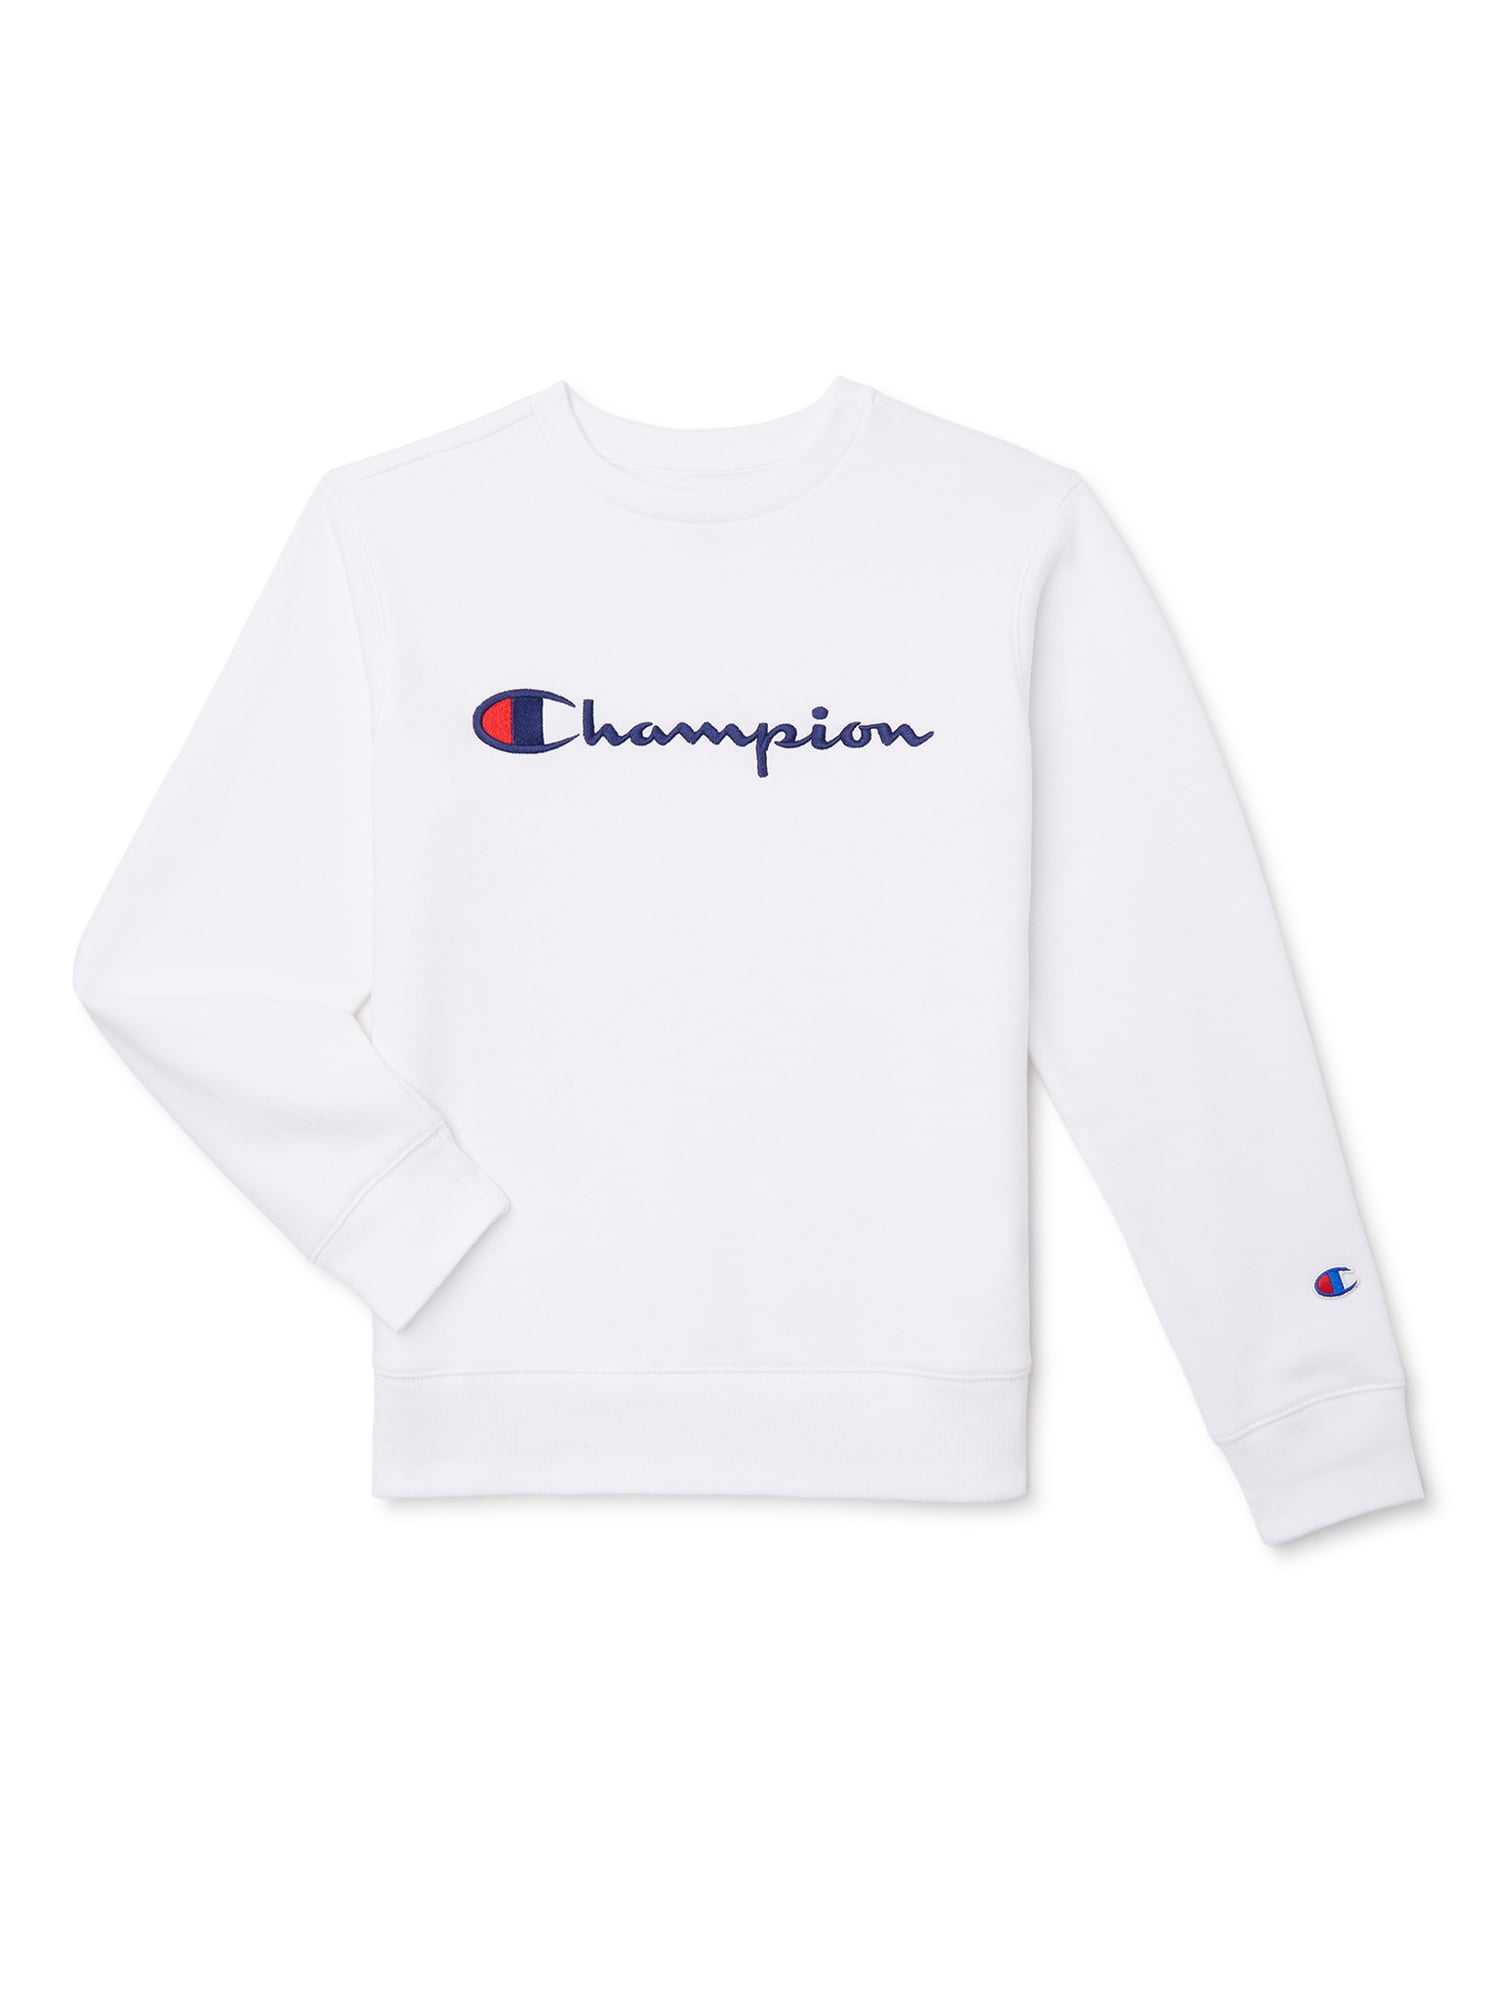 Sizes 8-20 Signature Crewneck Boys Fleece Champion Sweatshirt,